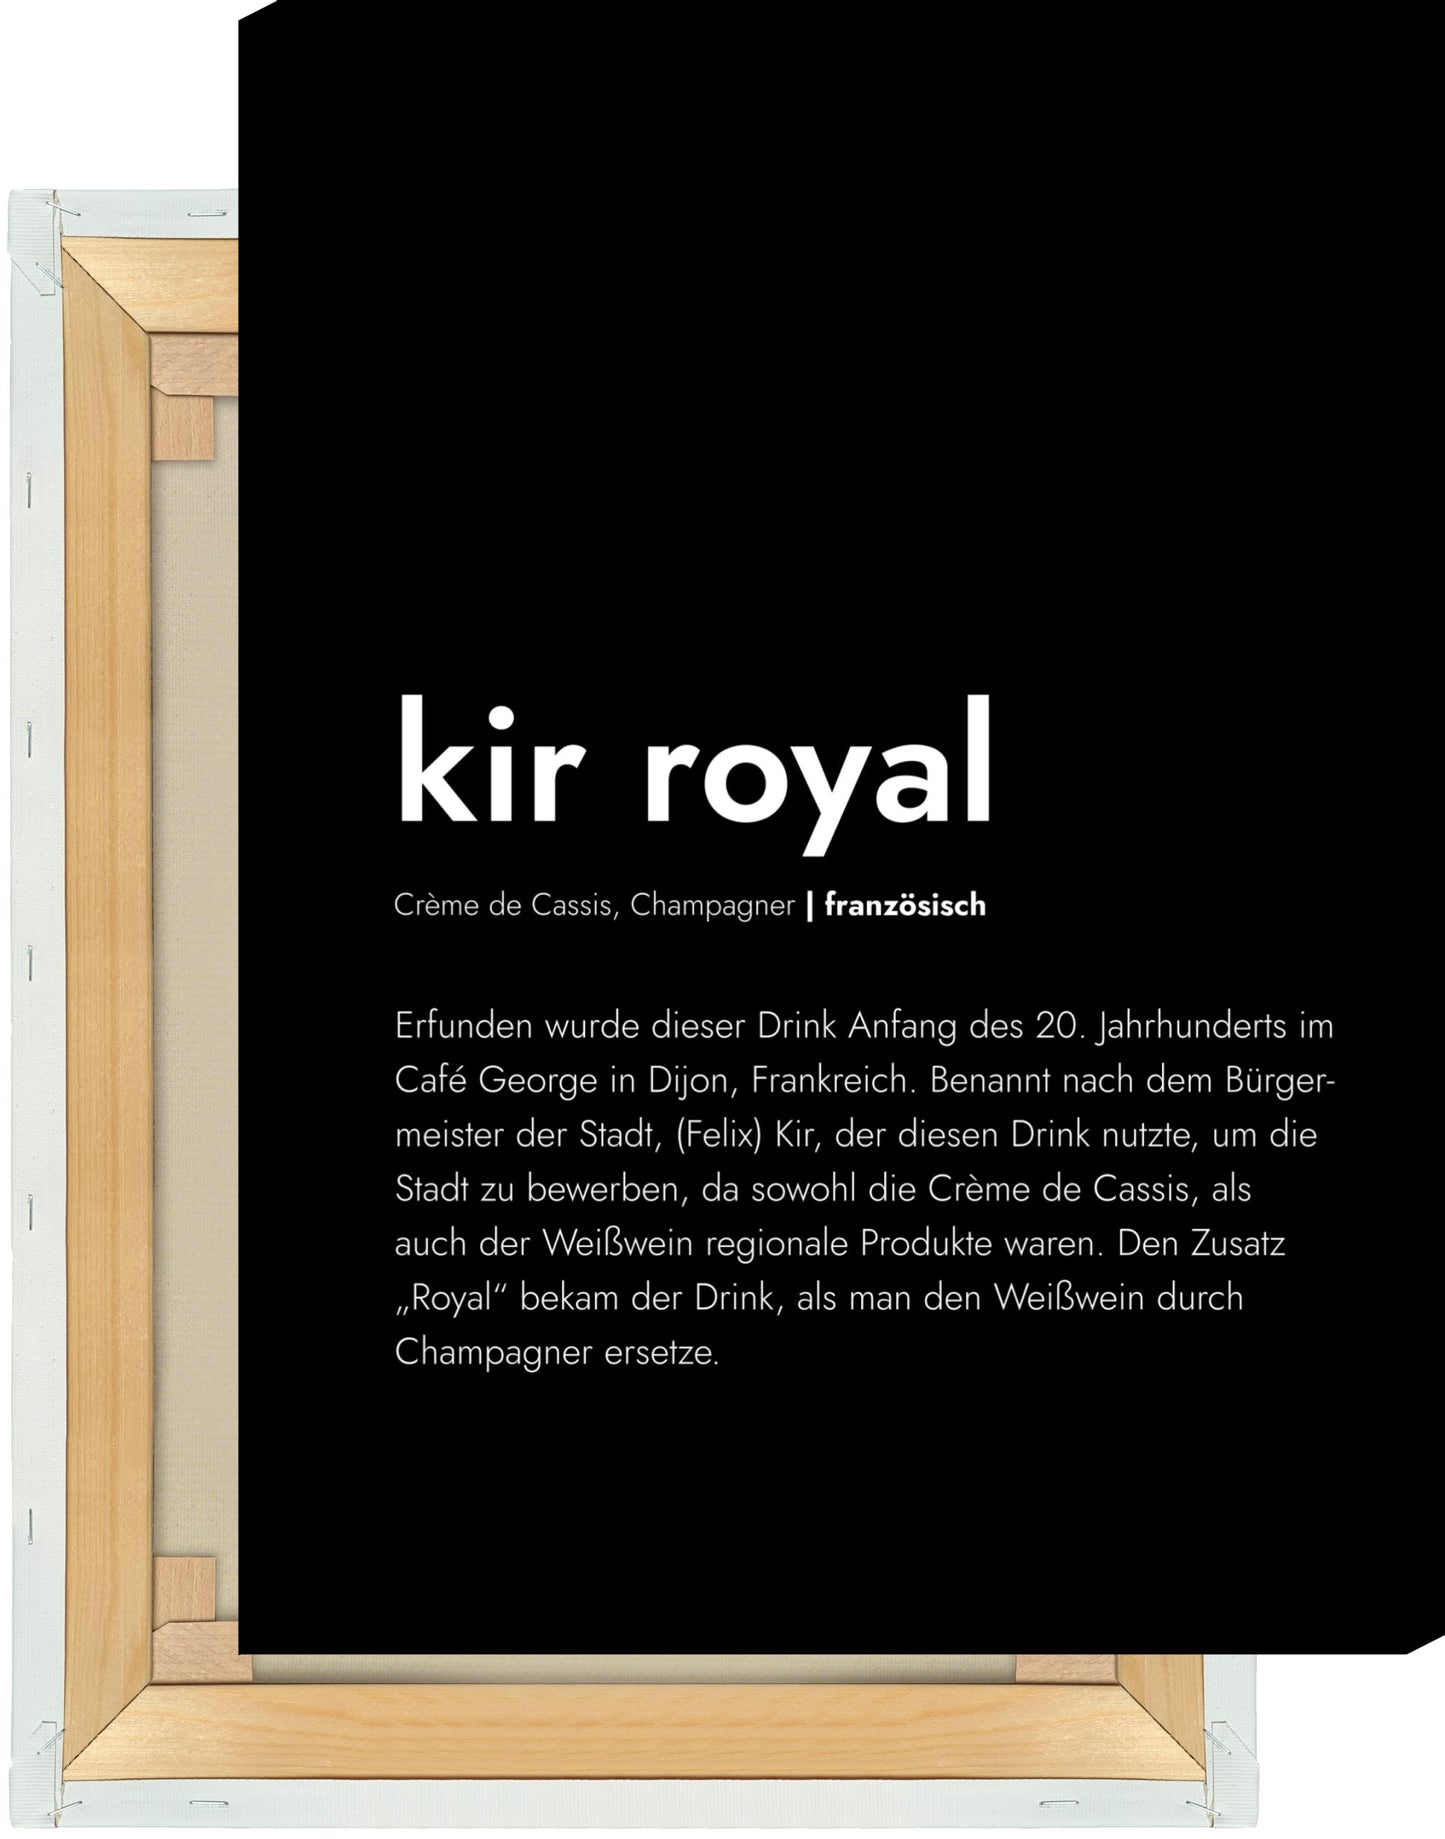 Leinwand Kir Royal - Definition